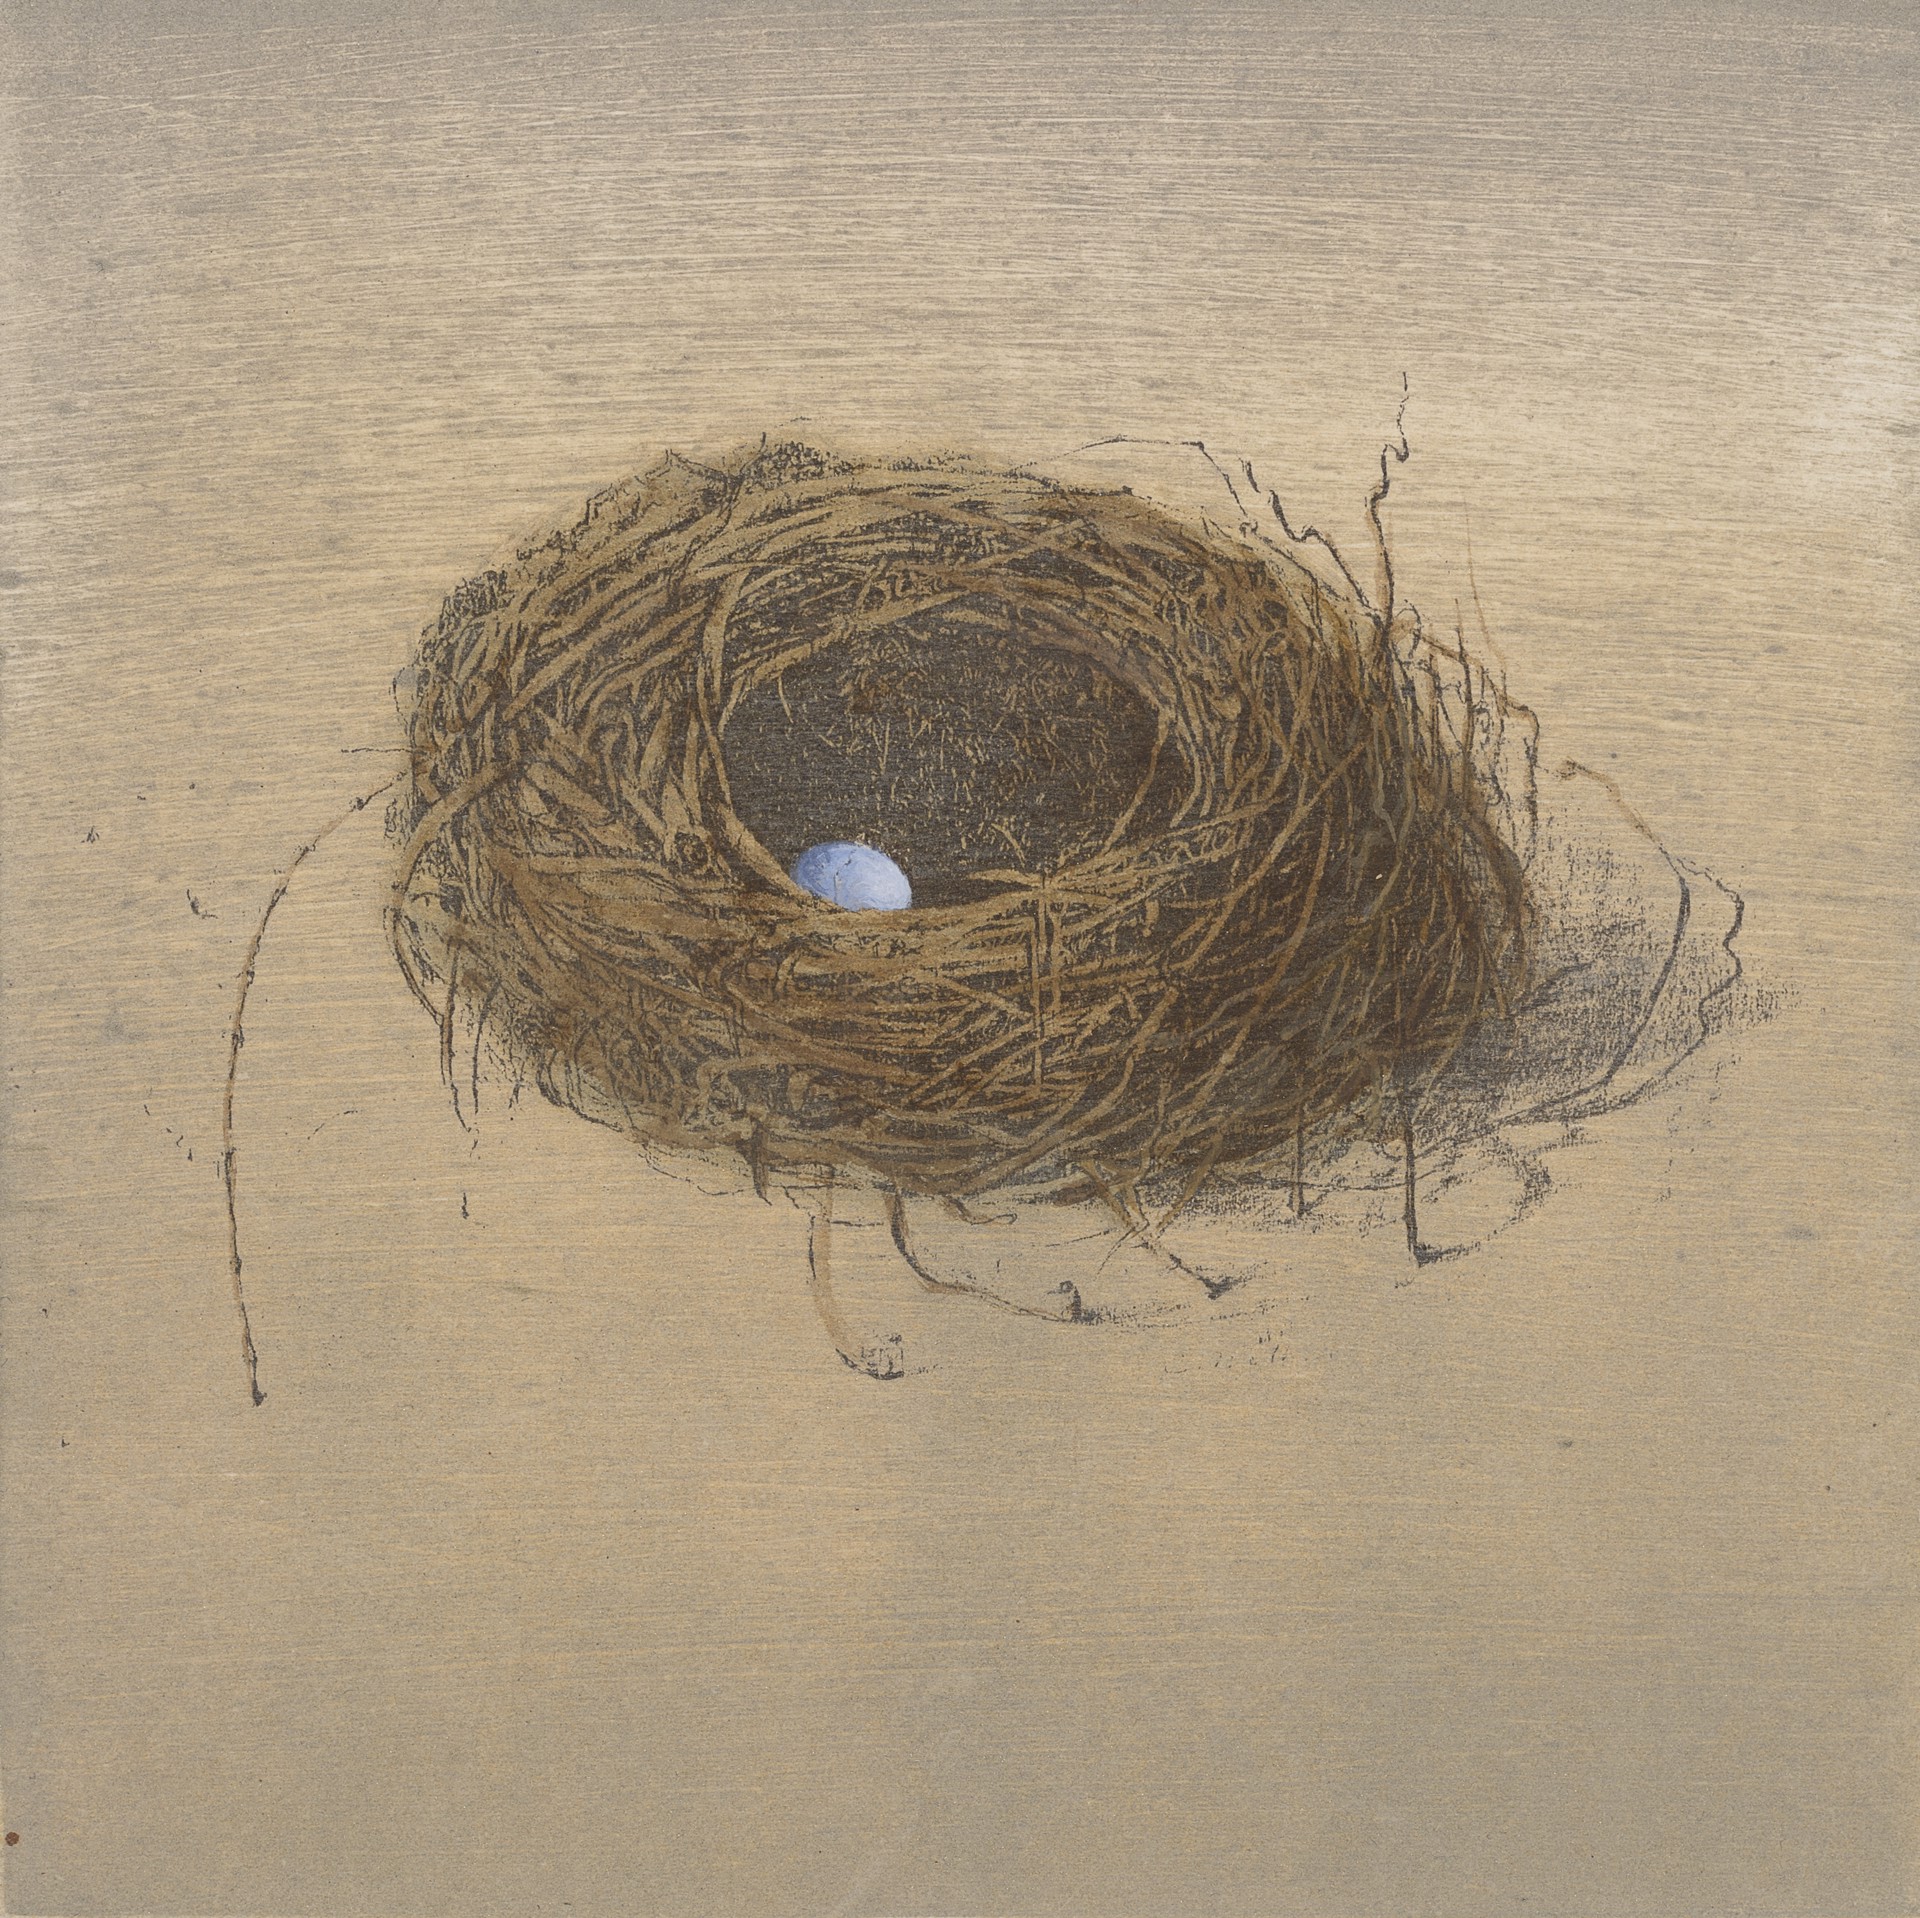 Untitled (Nest) by Carol Mothner